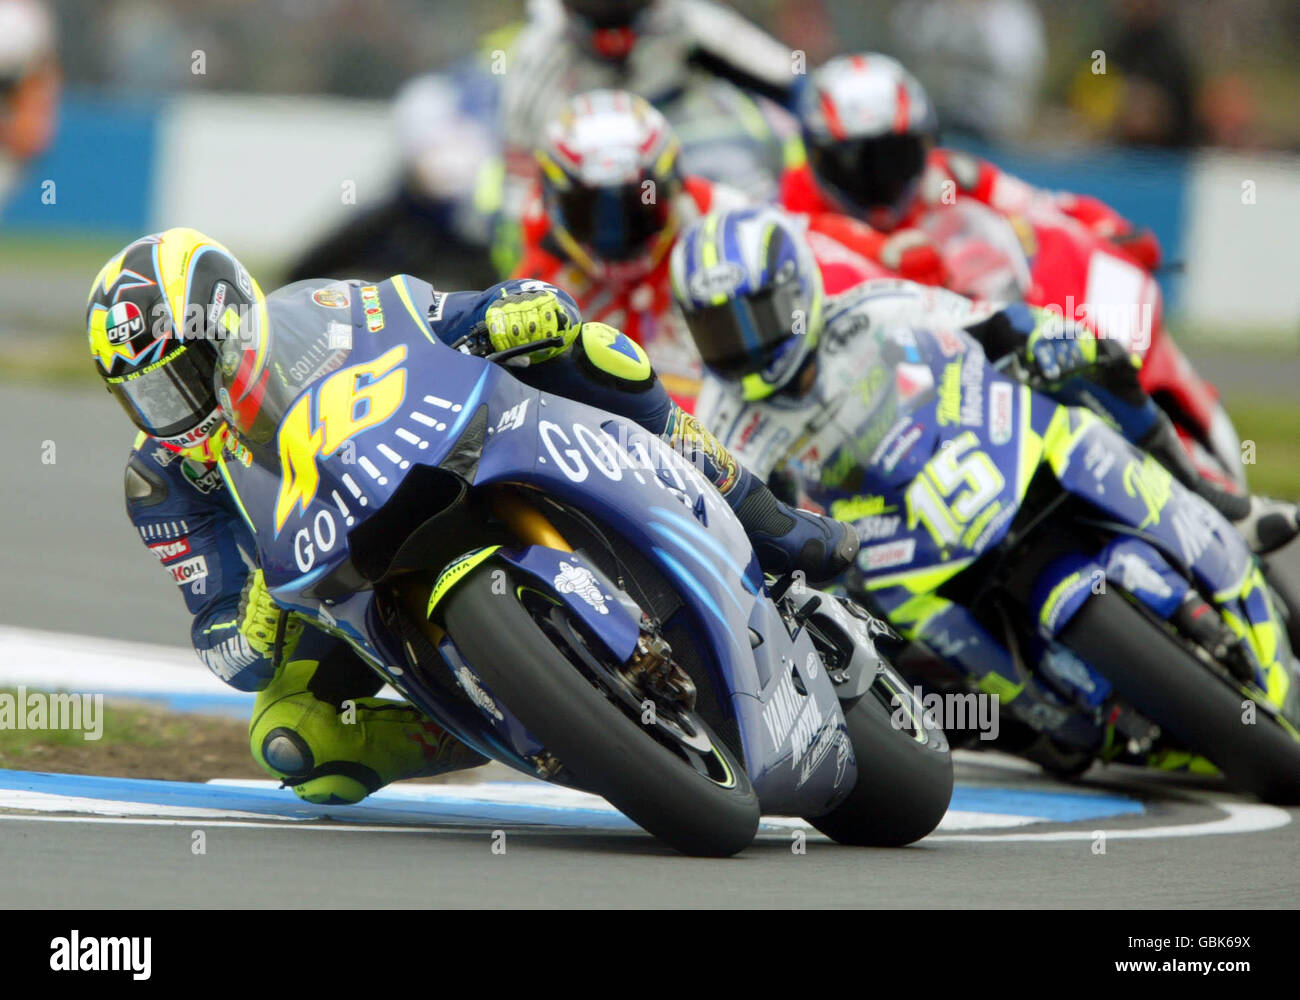 Motorcycling - British Grand Prix - Moto GP - Race Stock Photo